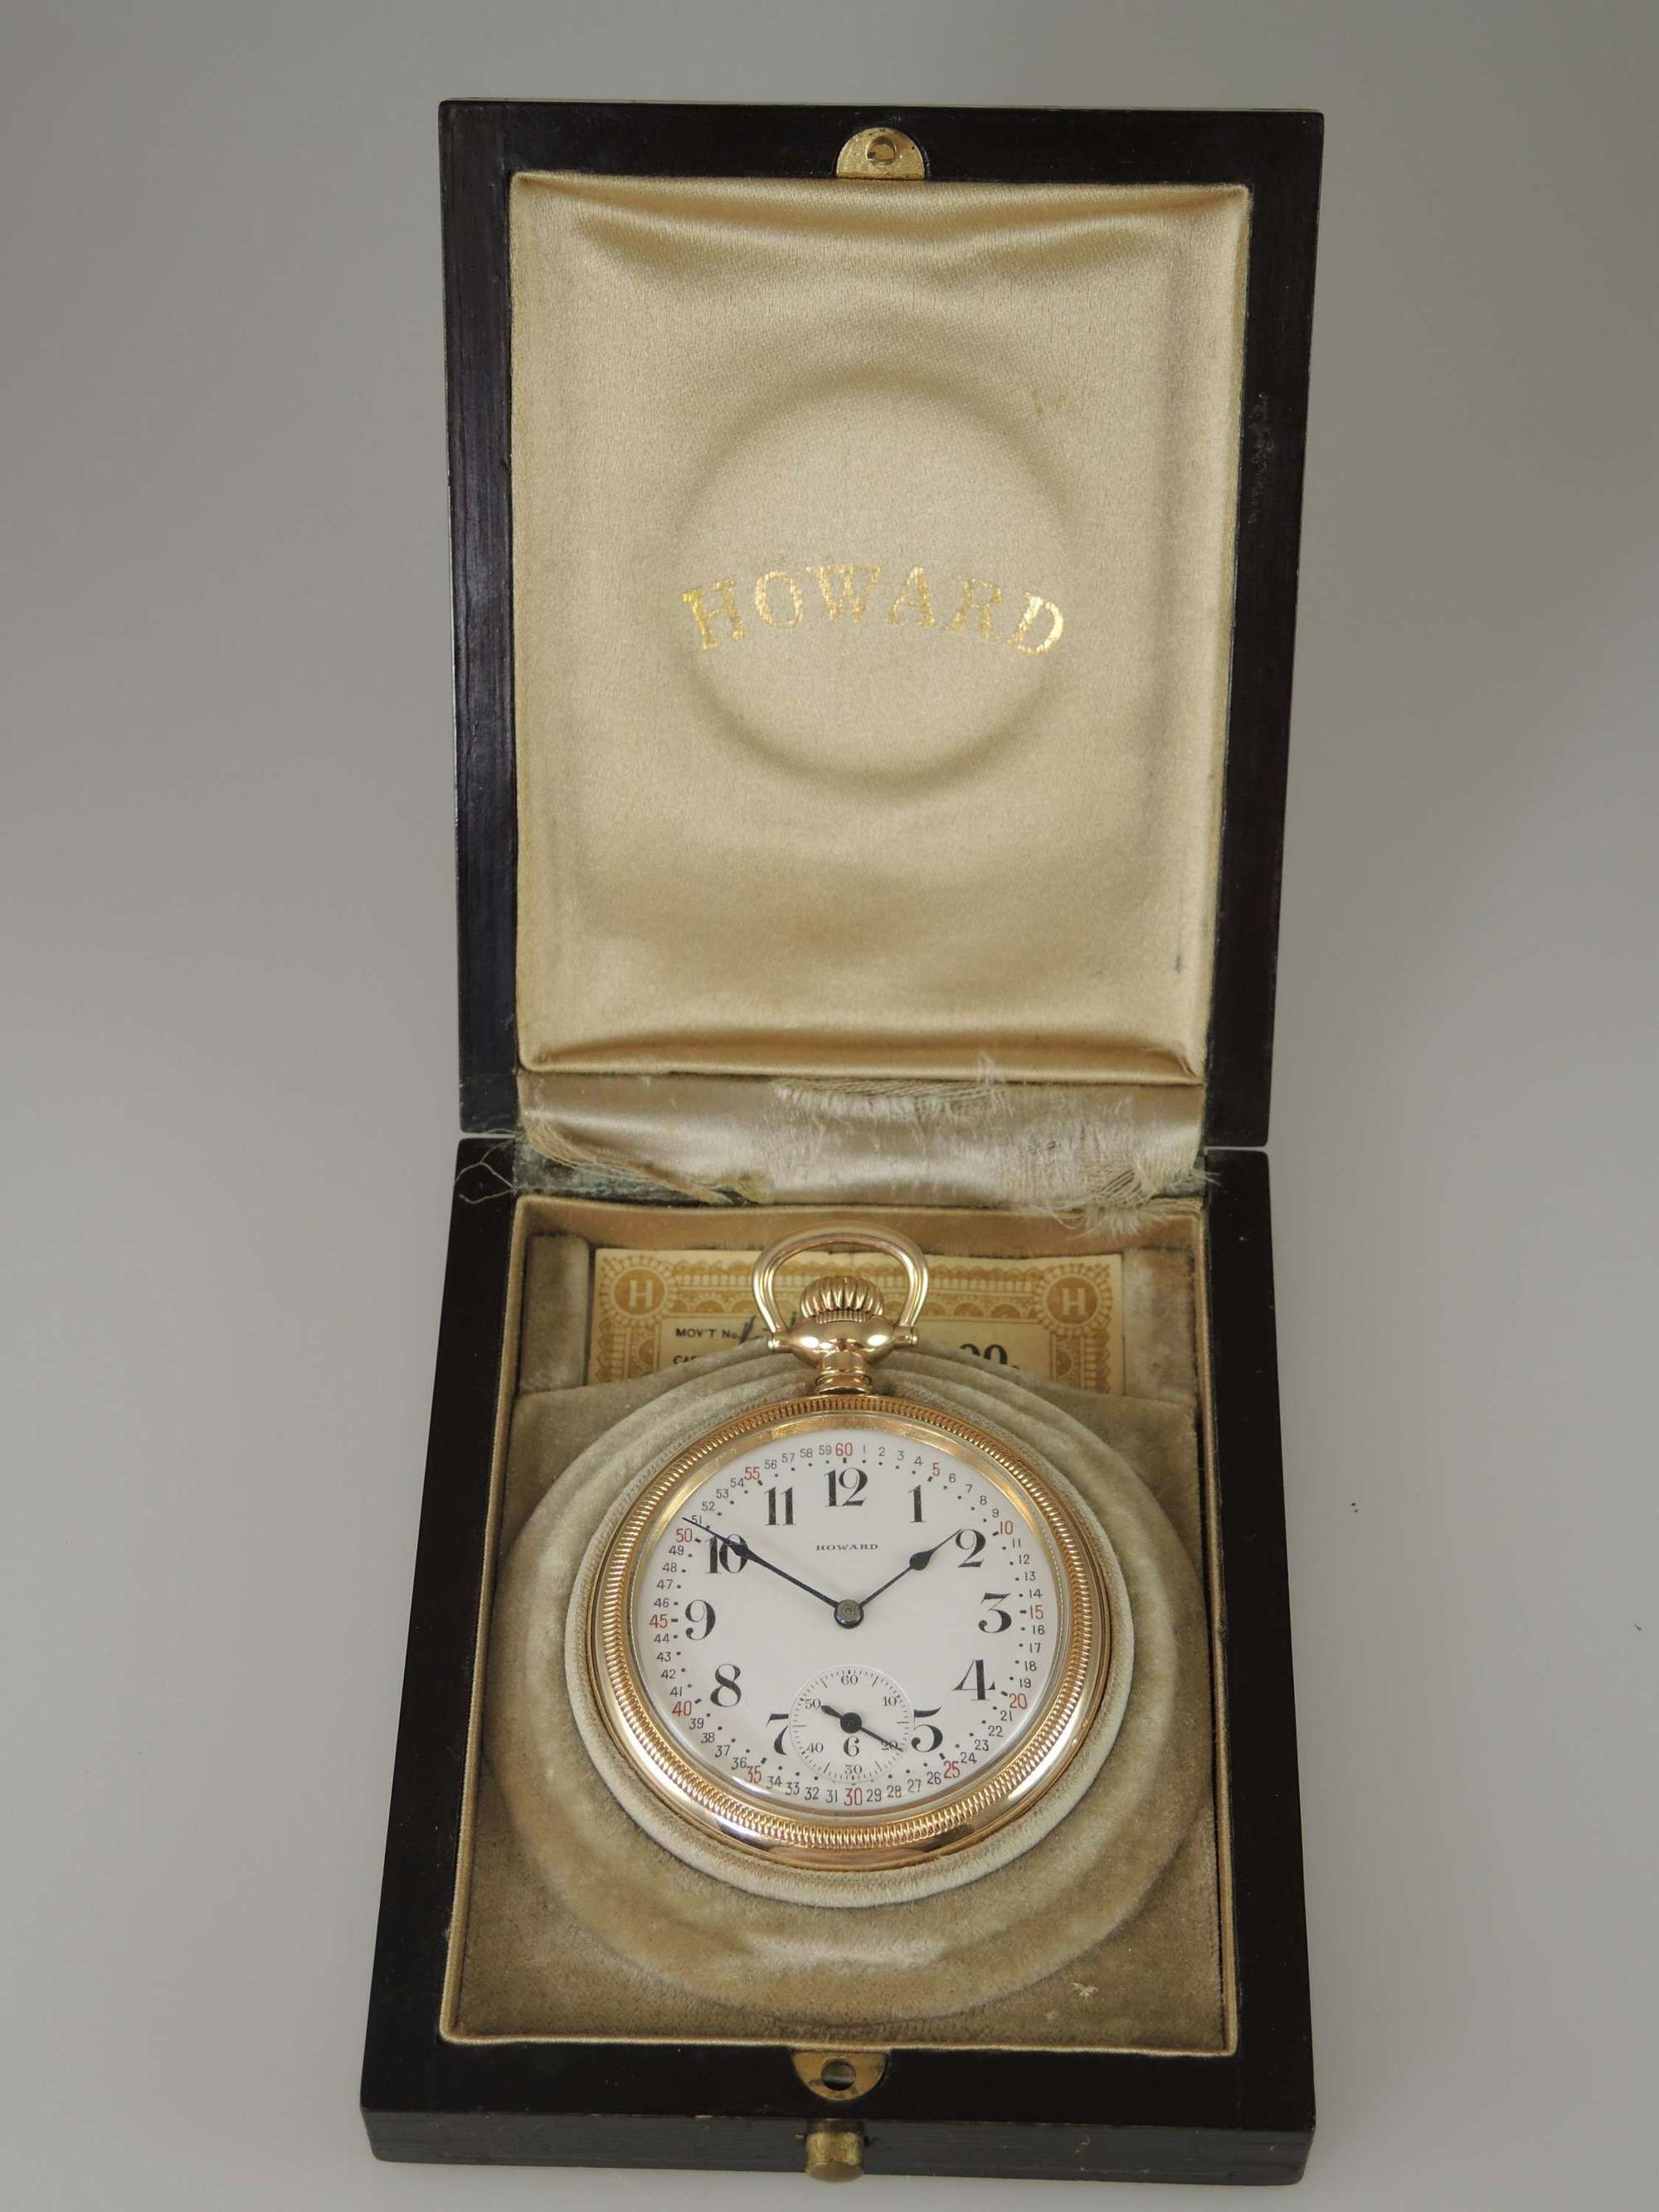 16s 21J E.Howard Watch Co Railroad Chronometer with original box c1916